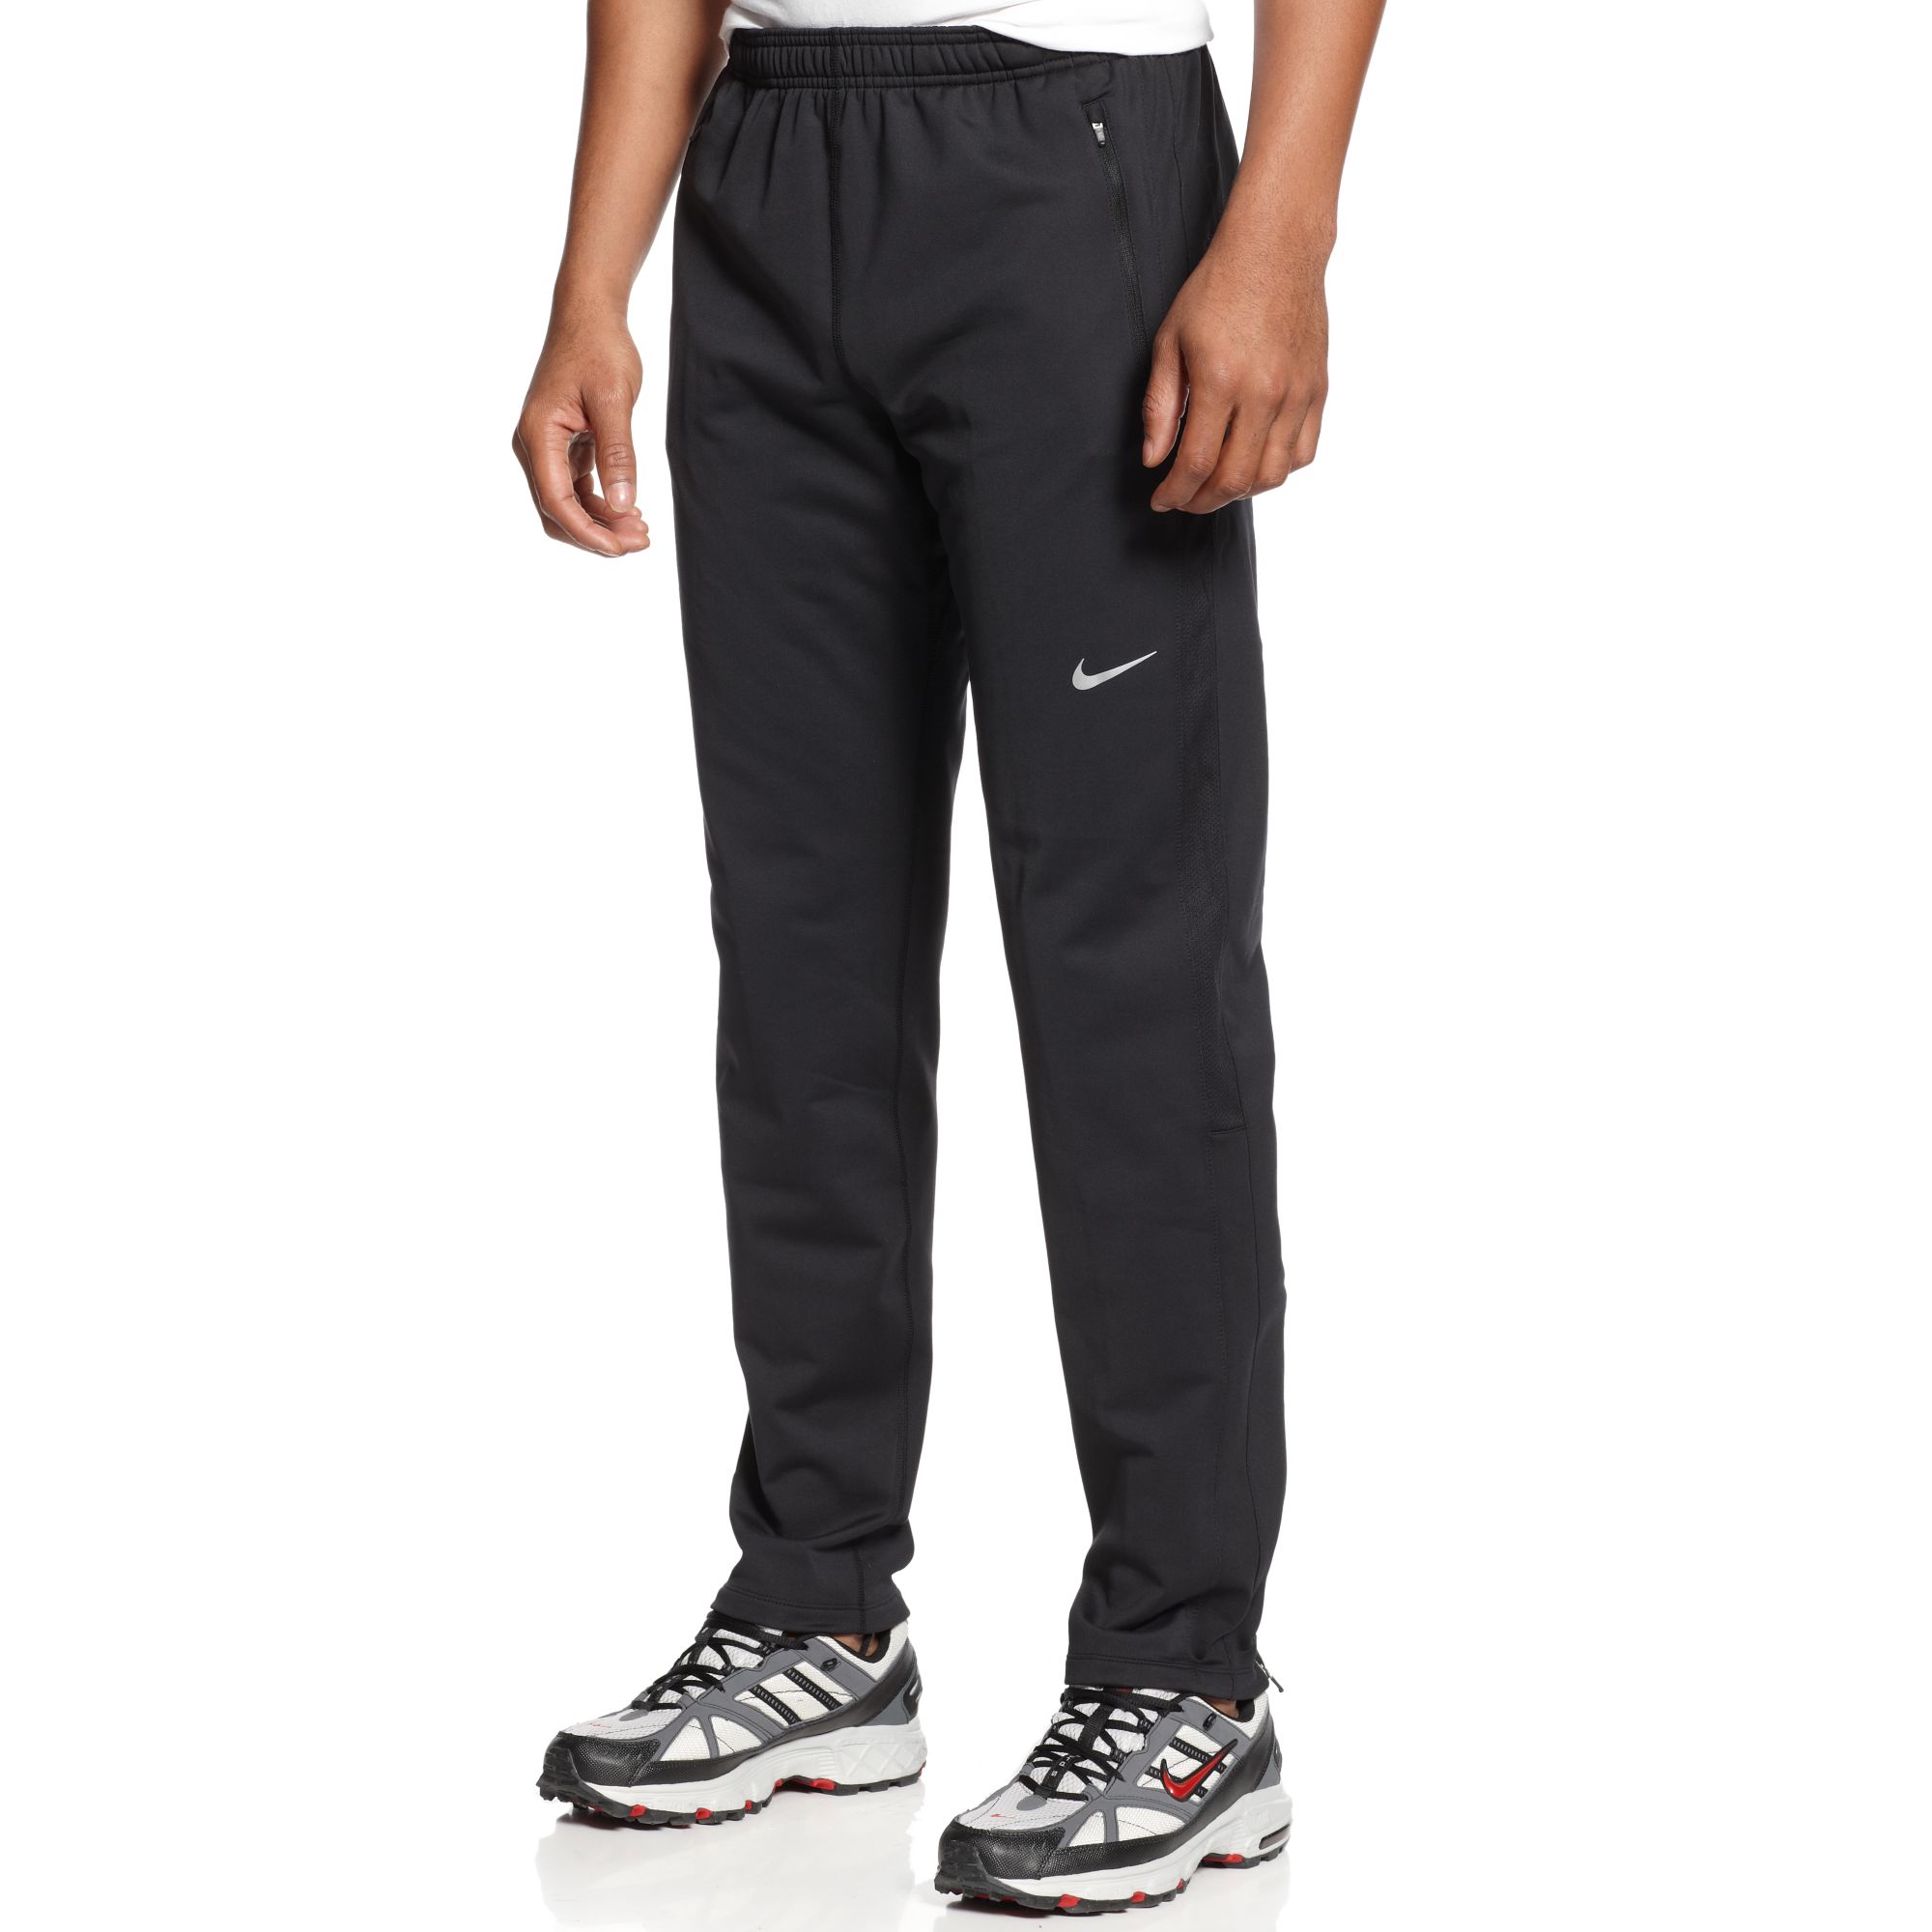 Lyst - Nike Element Drifit Thermal Pants in Black for Men